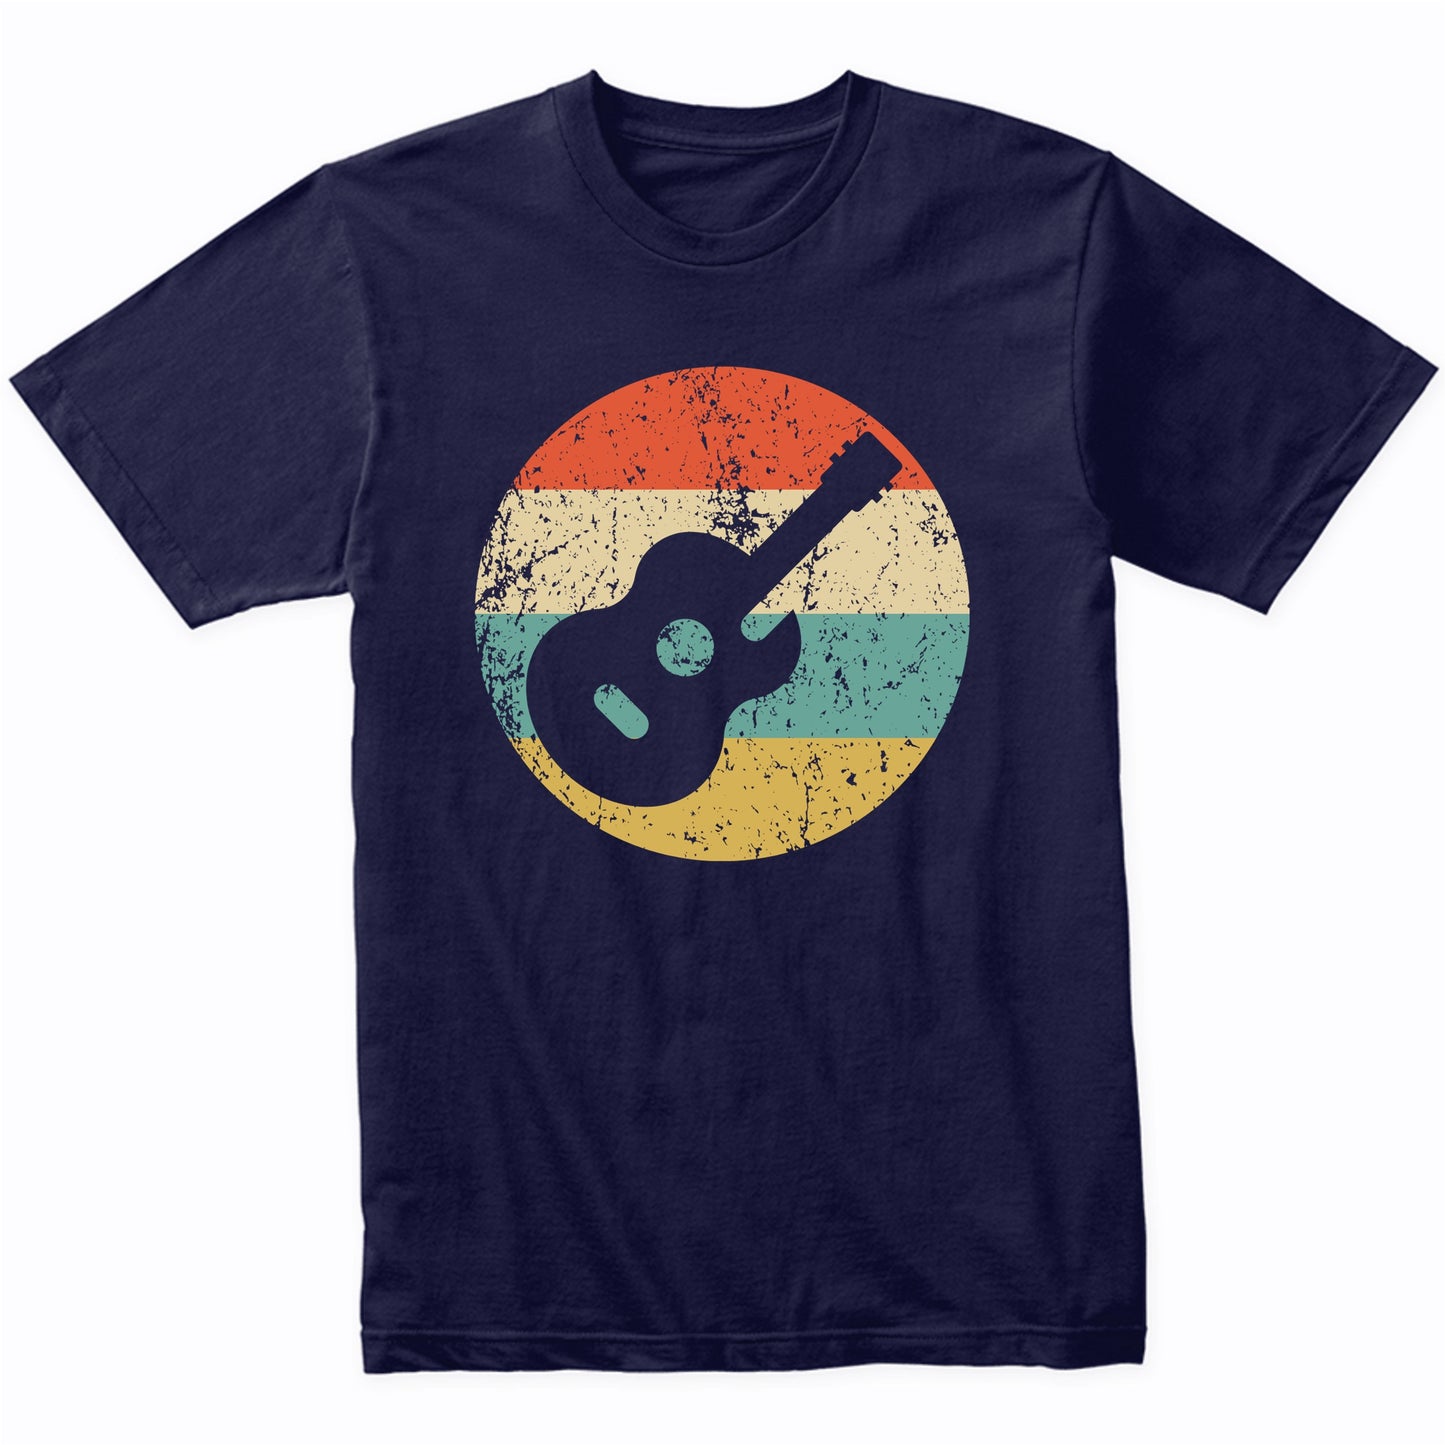 Guitarist Shirt - Retro Acoustic Guitar Icon T-Shirt